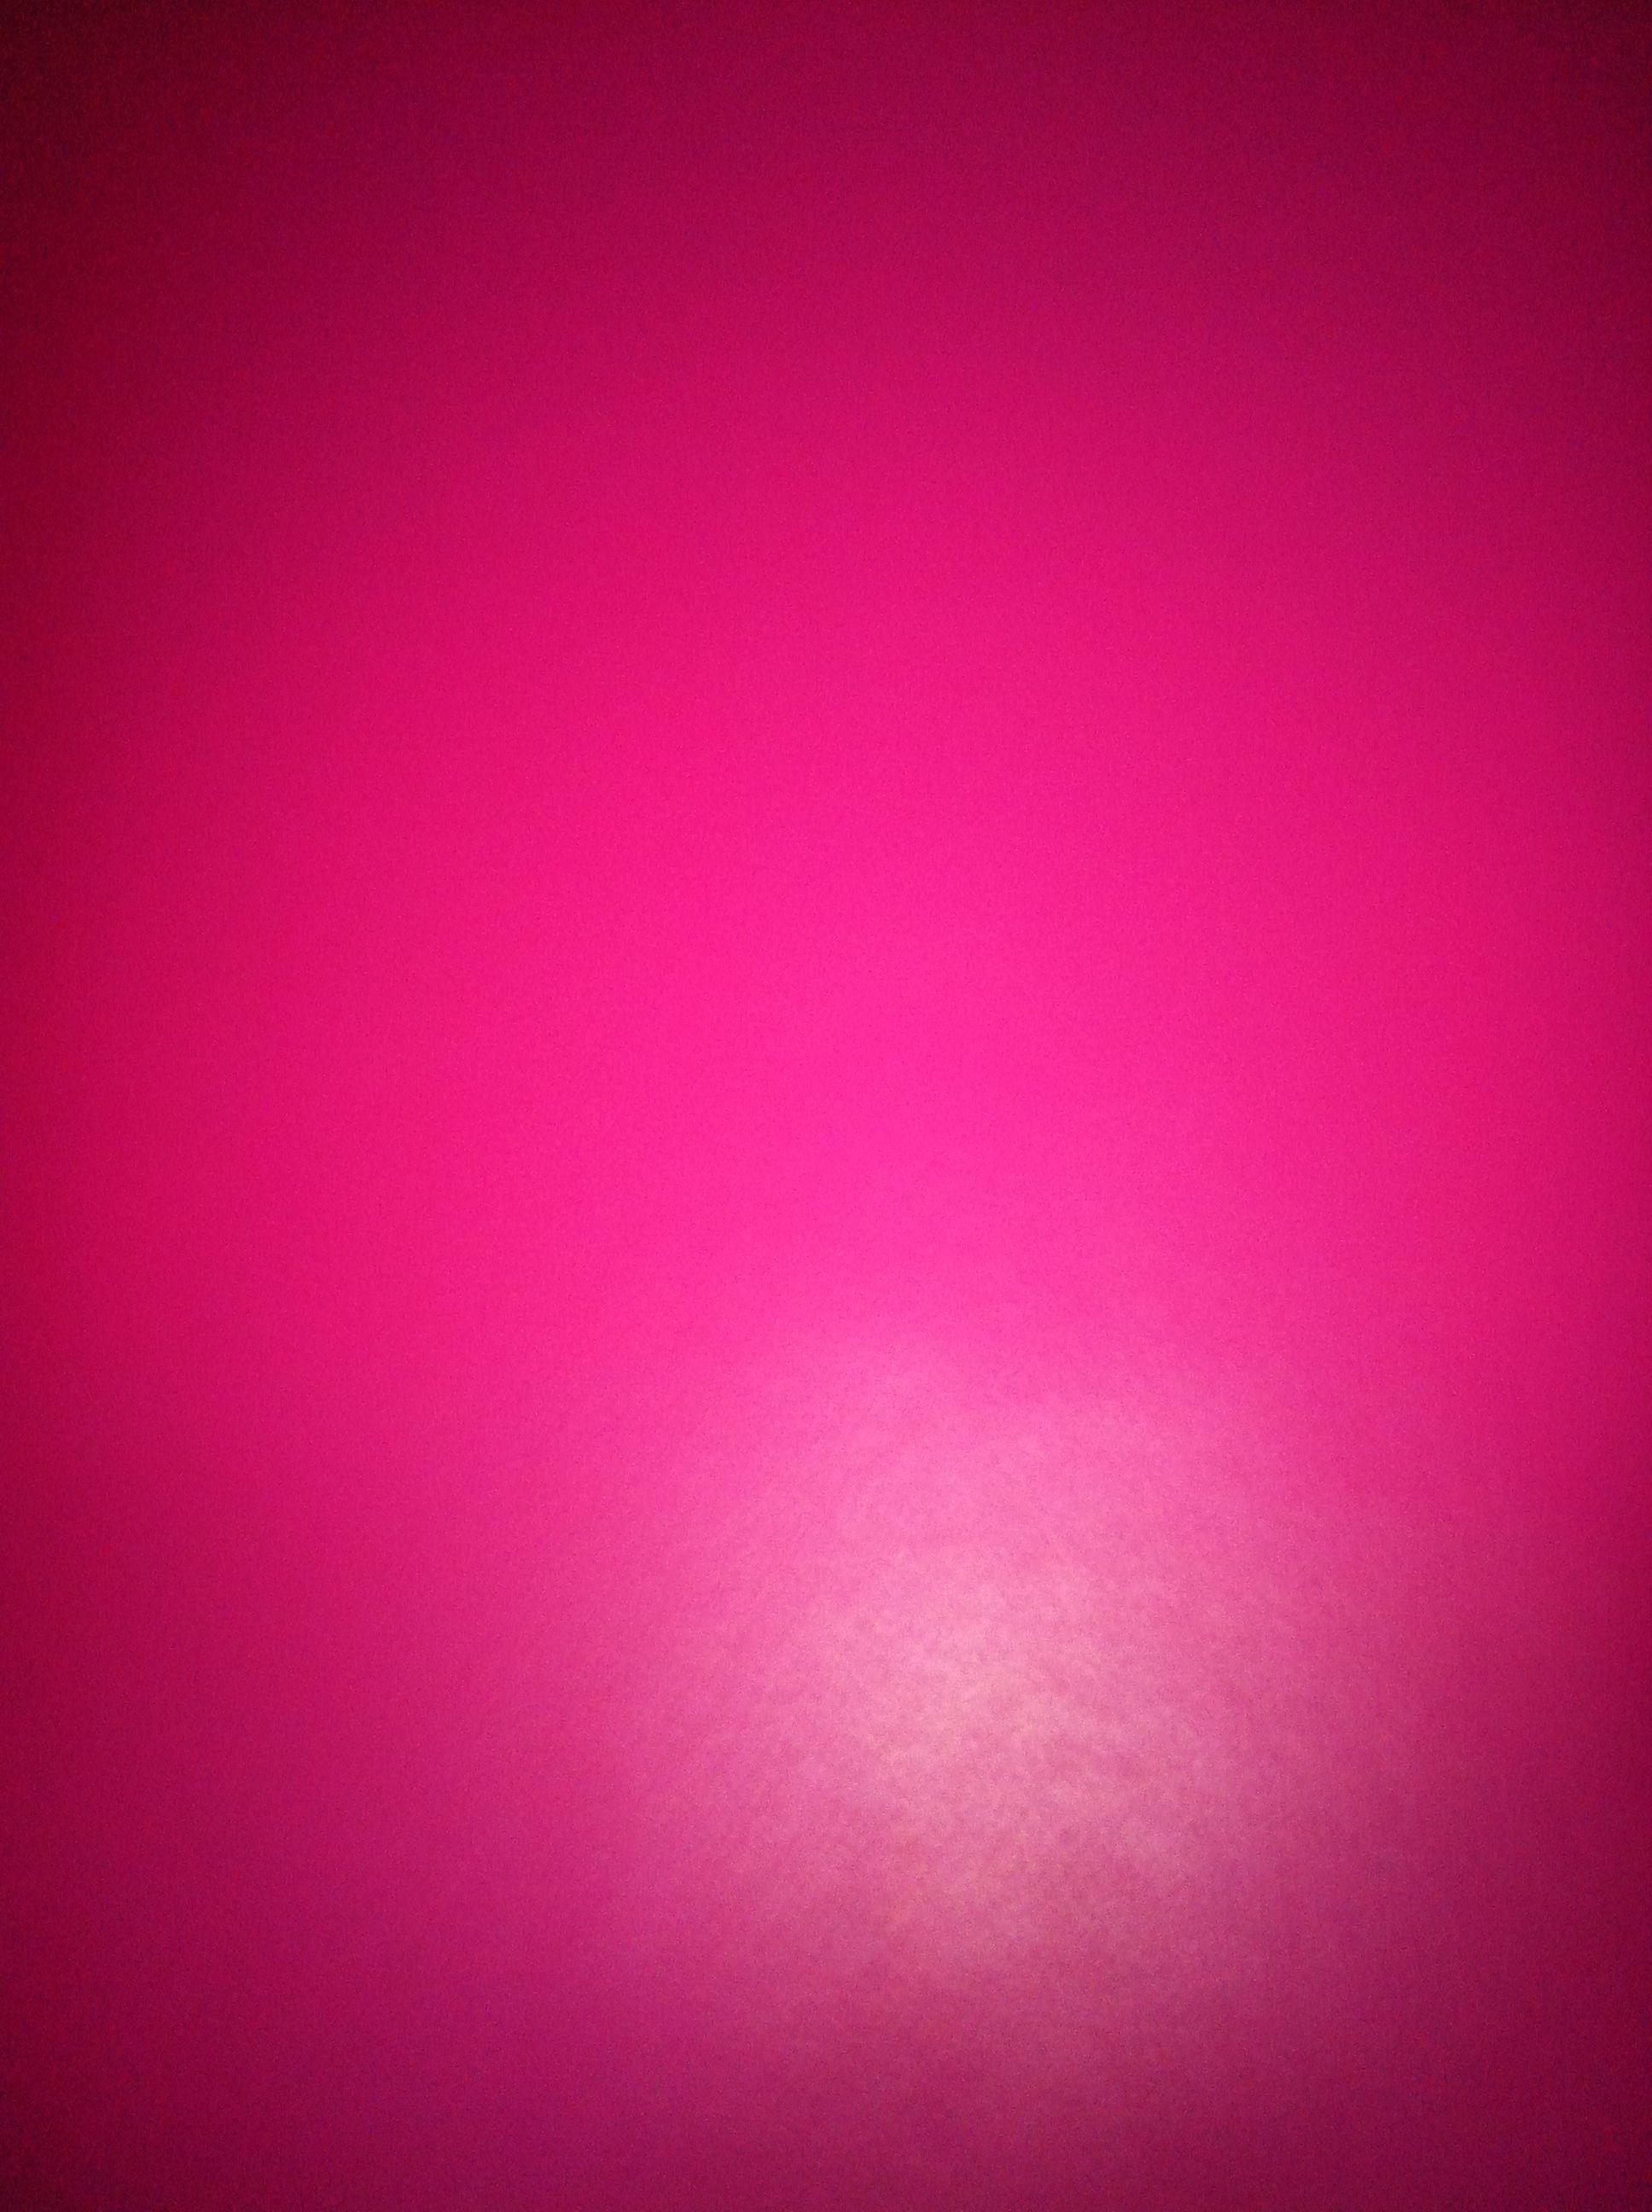 Shocking Pink Wallpapers - Wallpaper Cave